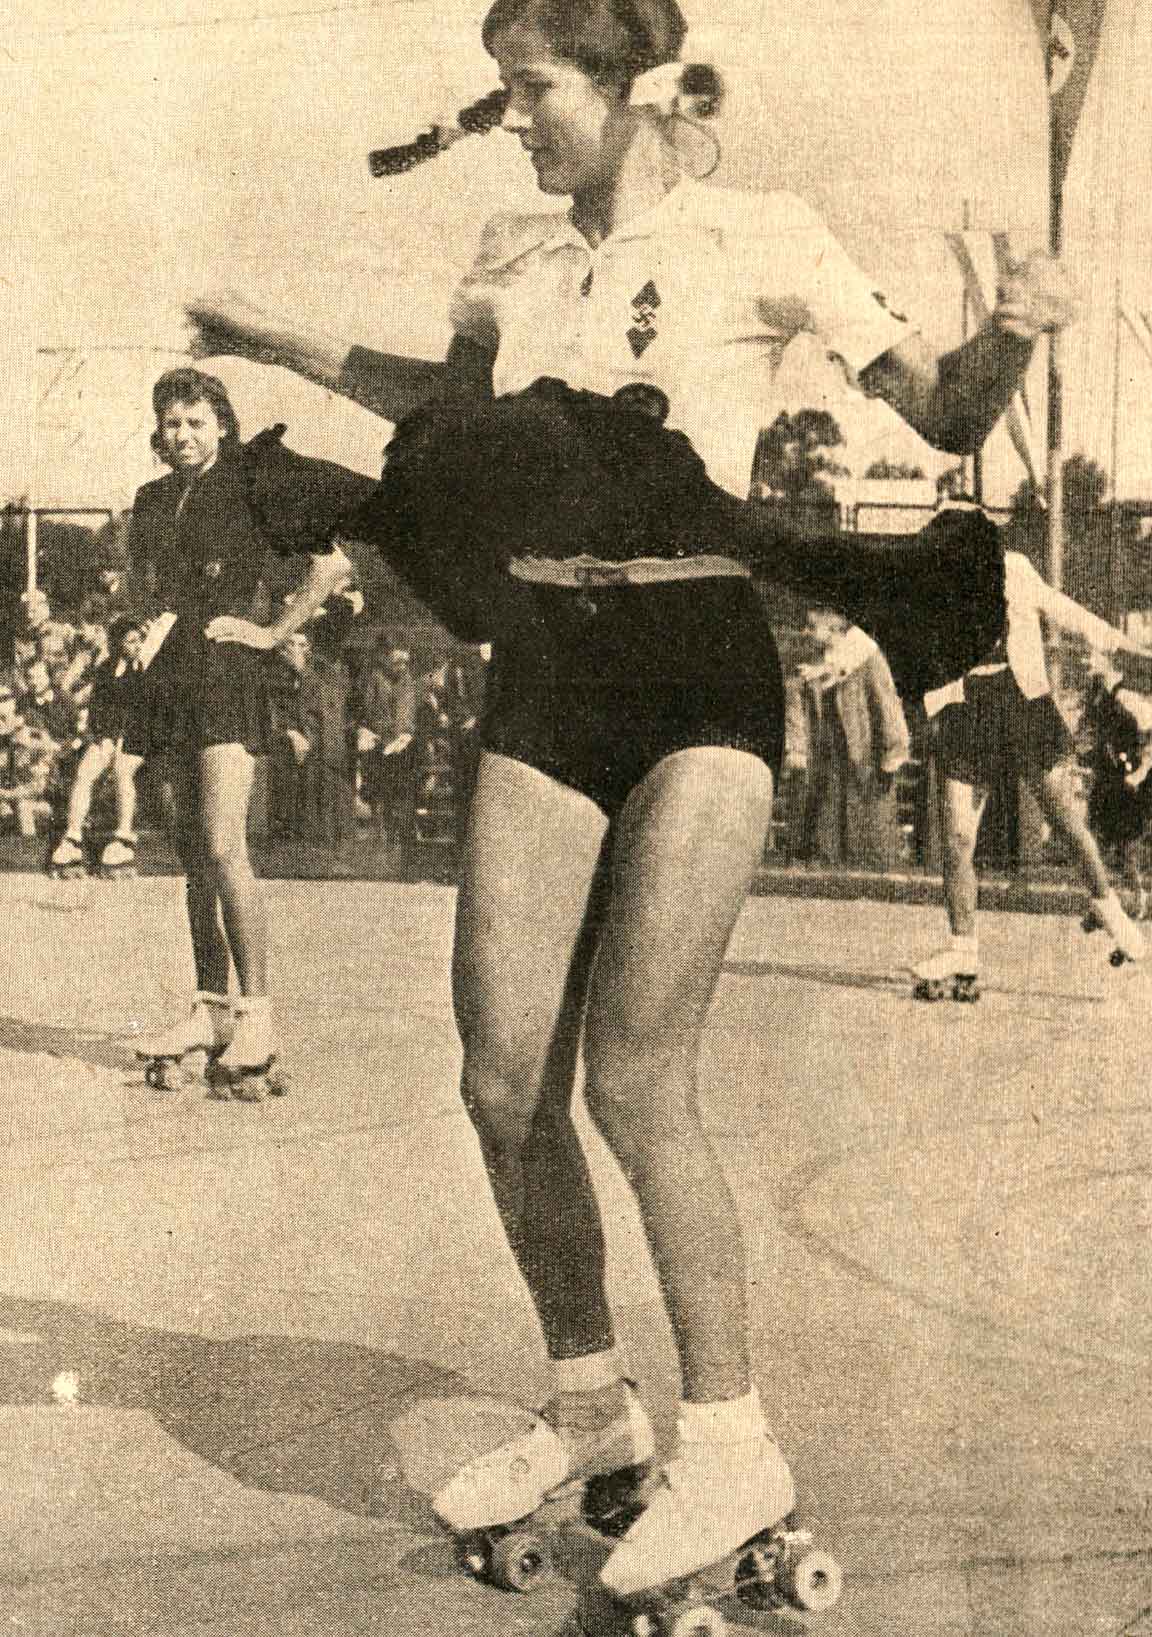 Girls rollerskating in Berlin, 1940.